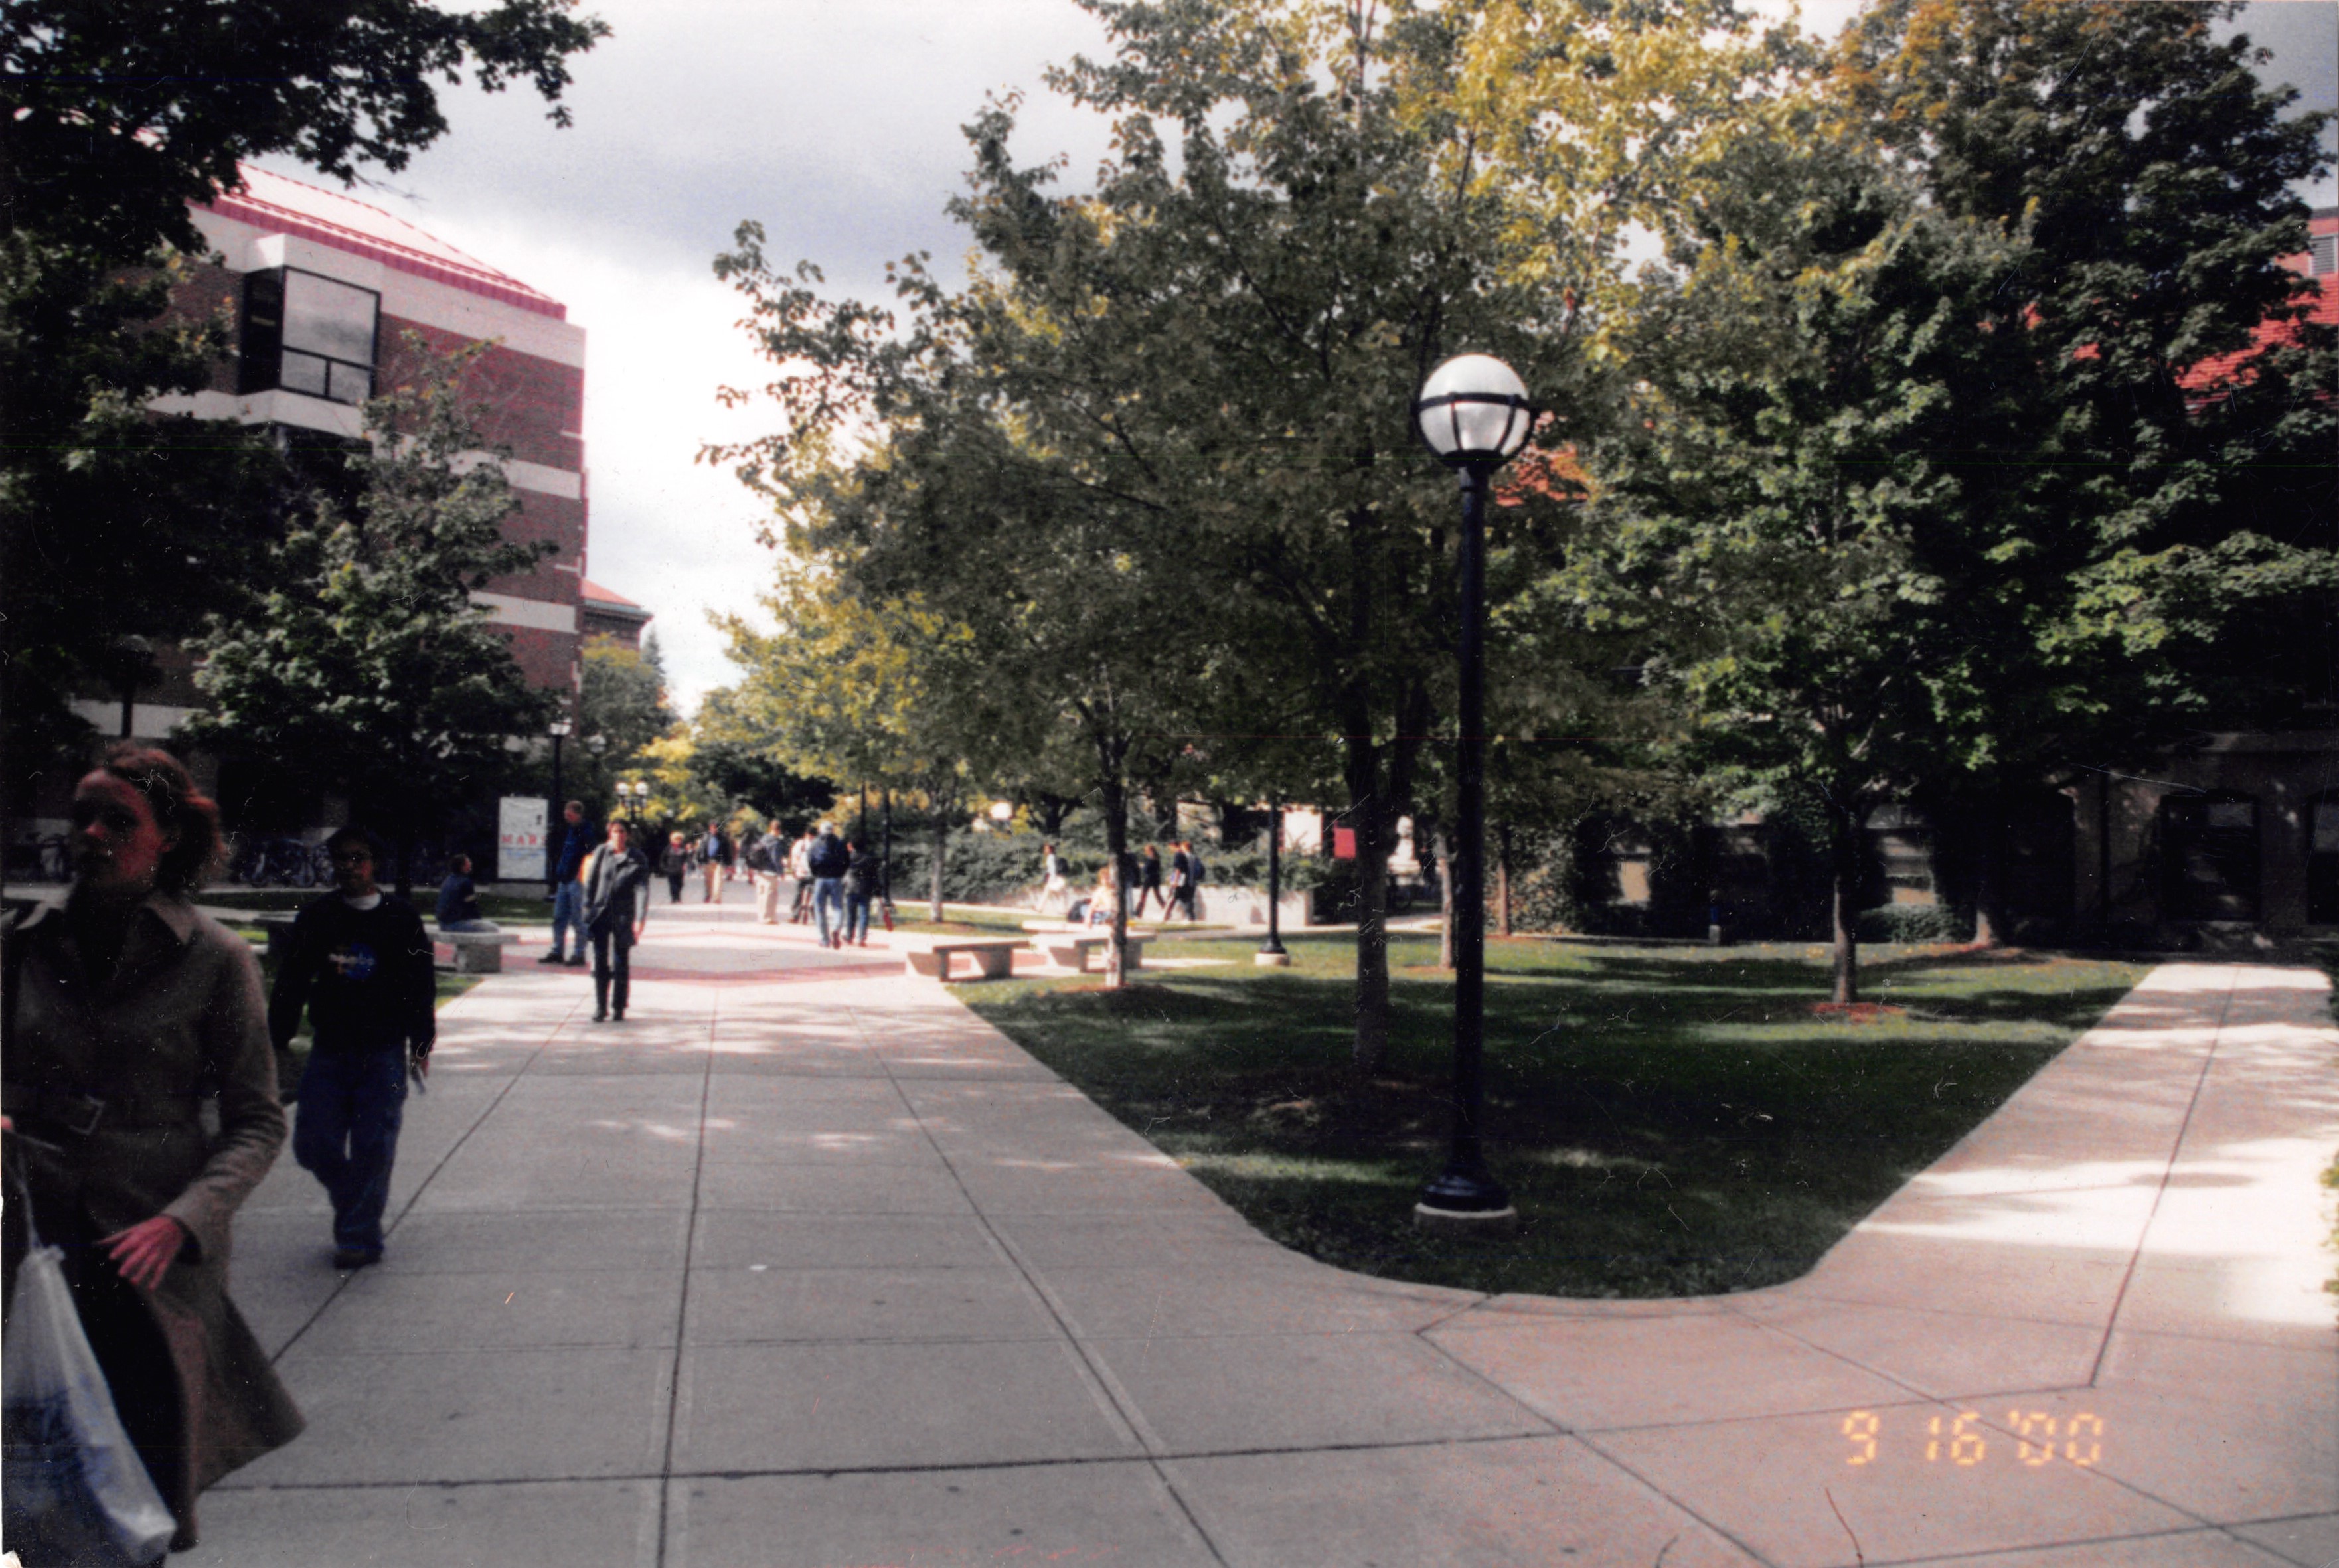 The University of Michigan - Ann Arbor